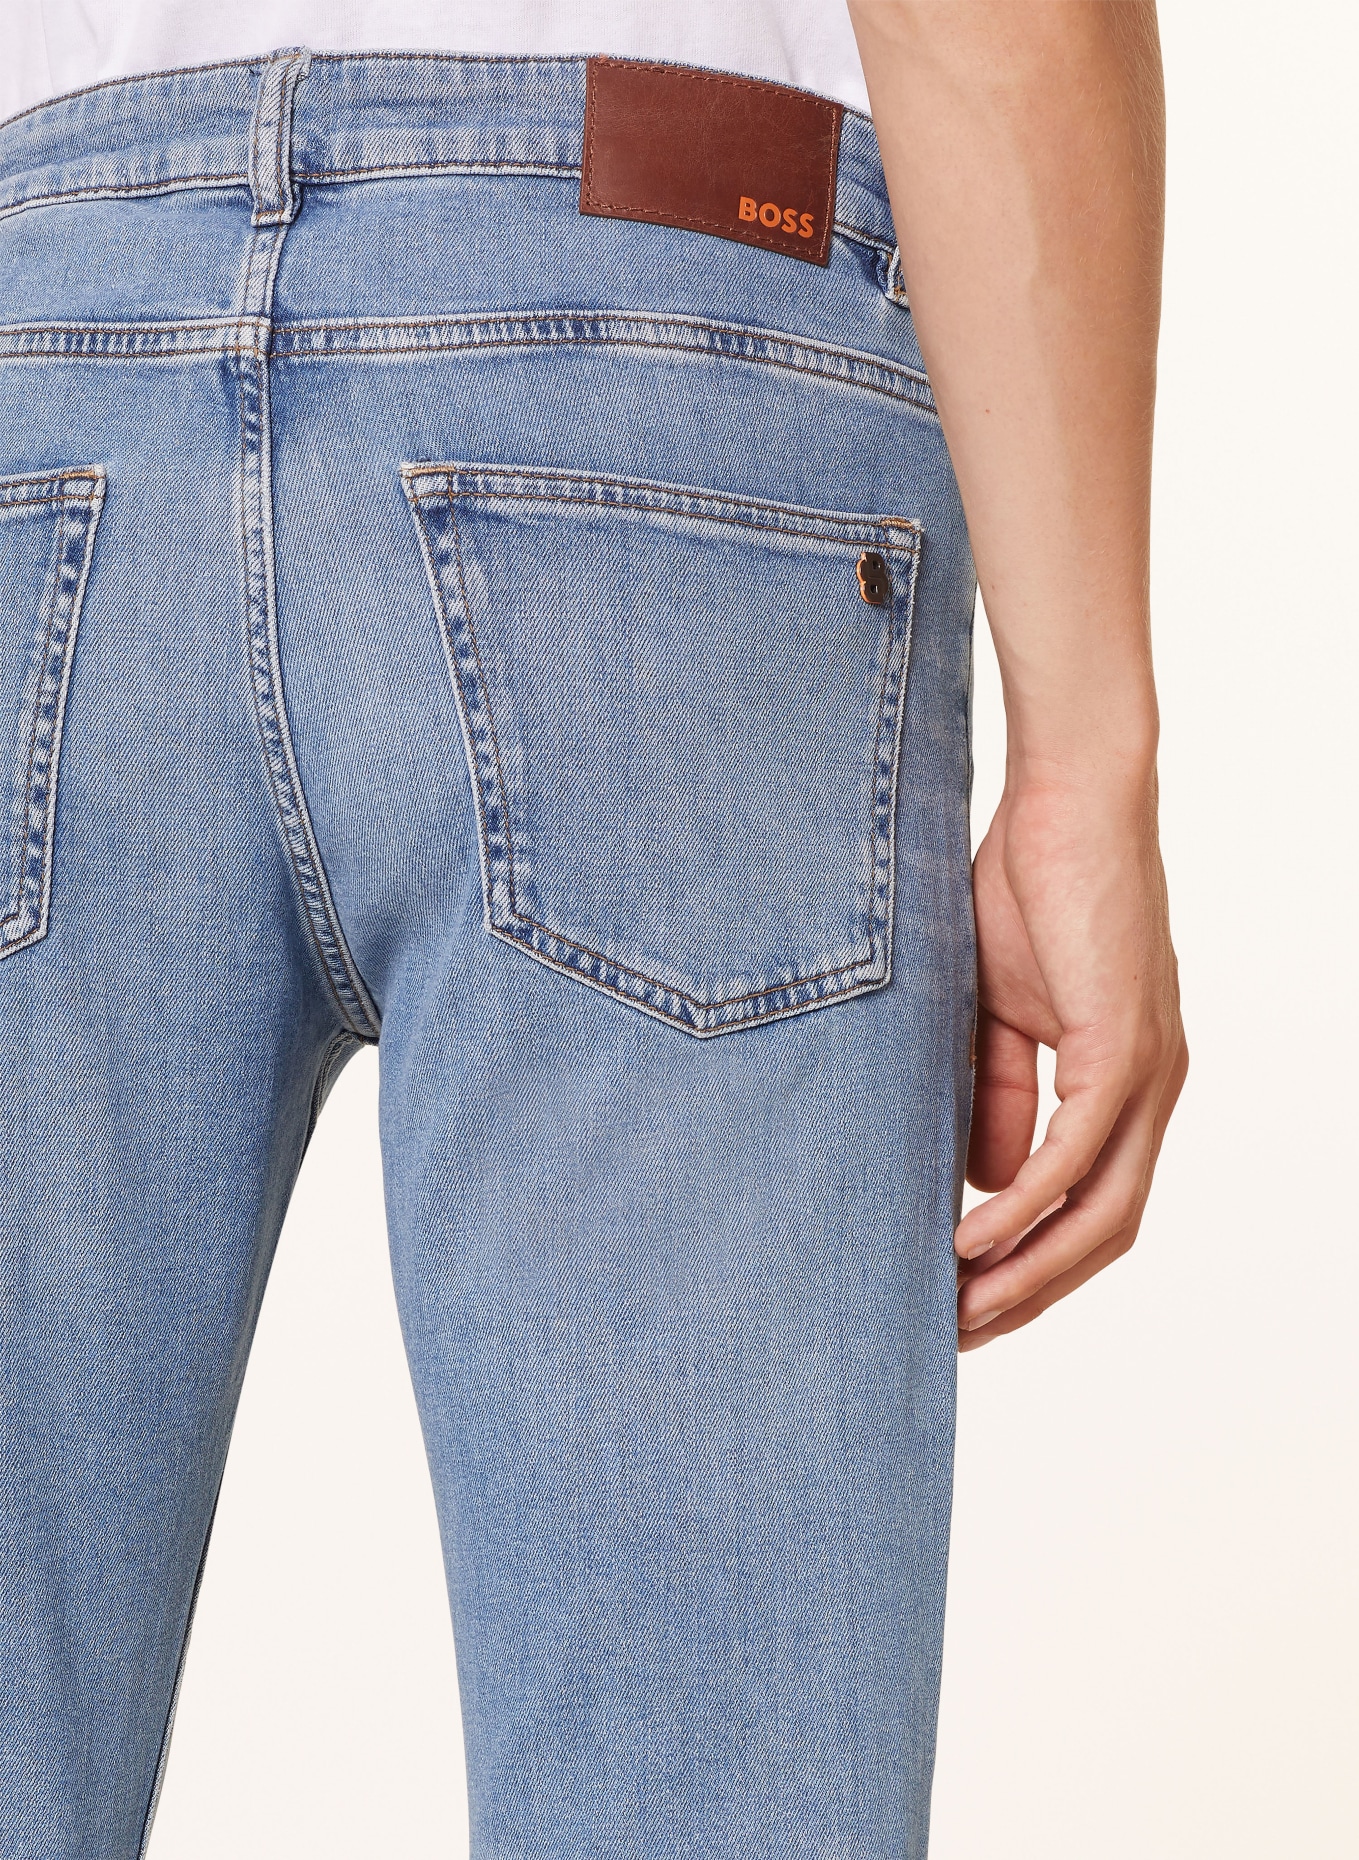 BOSS Jeans DELAWARE Slim Fit, Farbe: 430 BRIGHT BLUE (Bild 6)